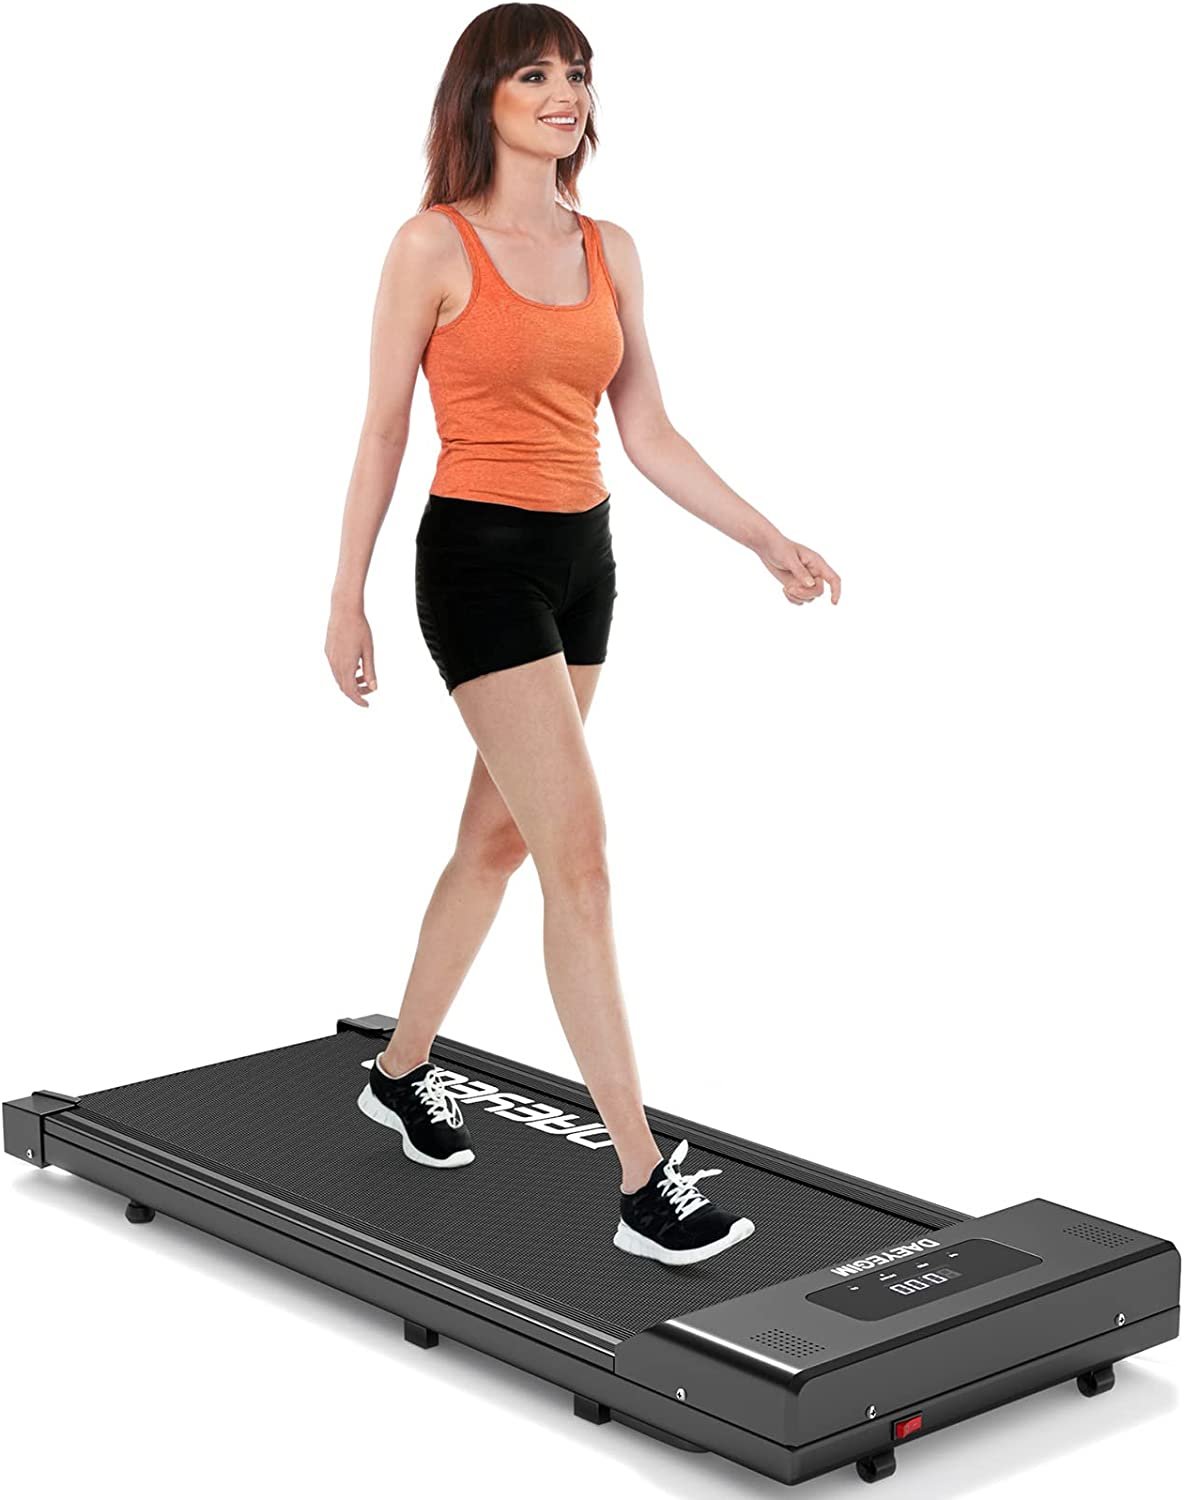 Daeyegim Desk Treadmill Walking Pad